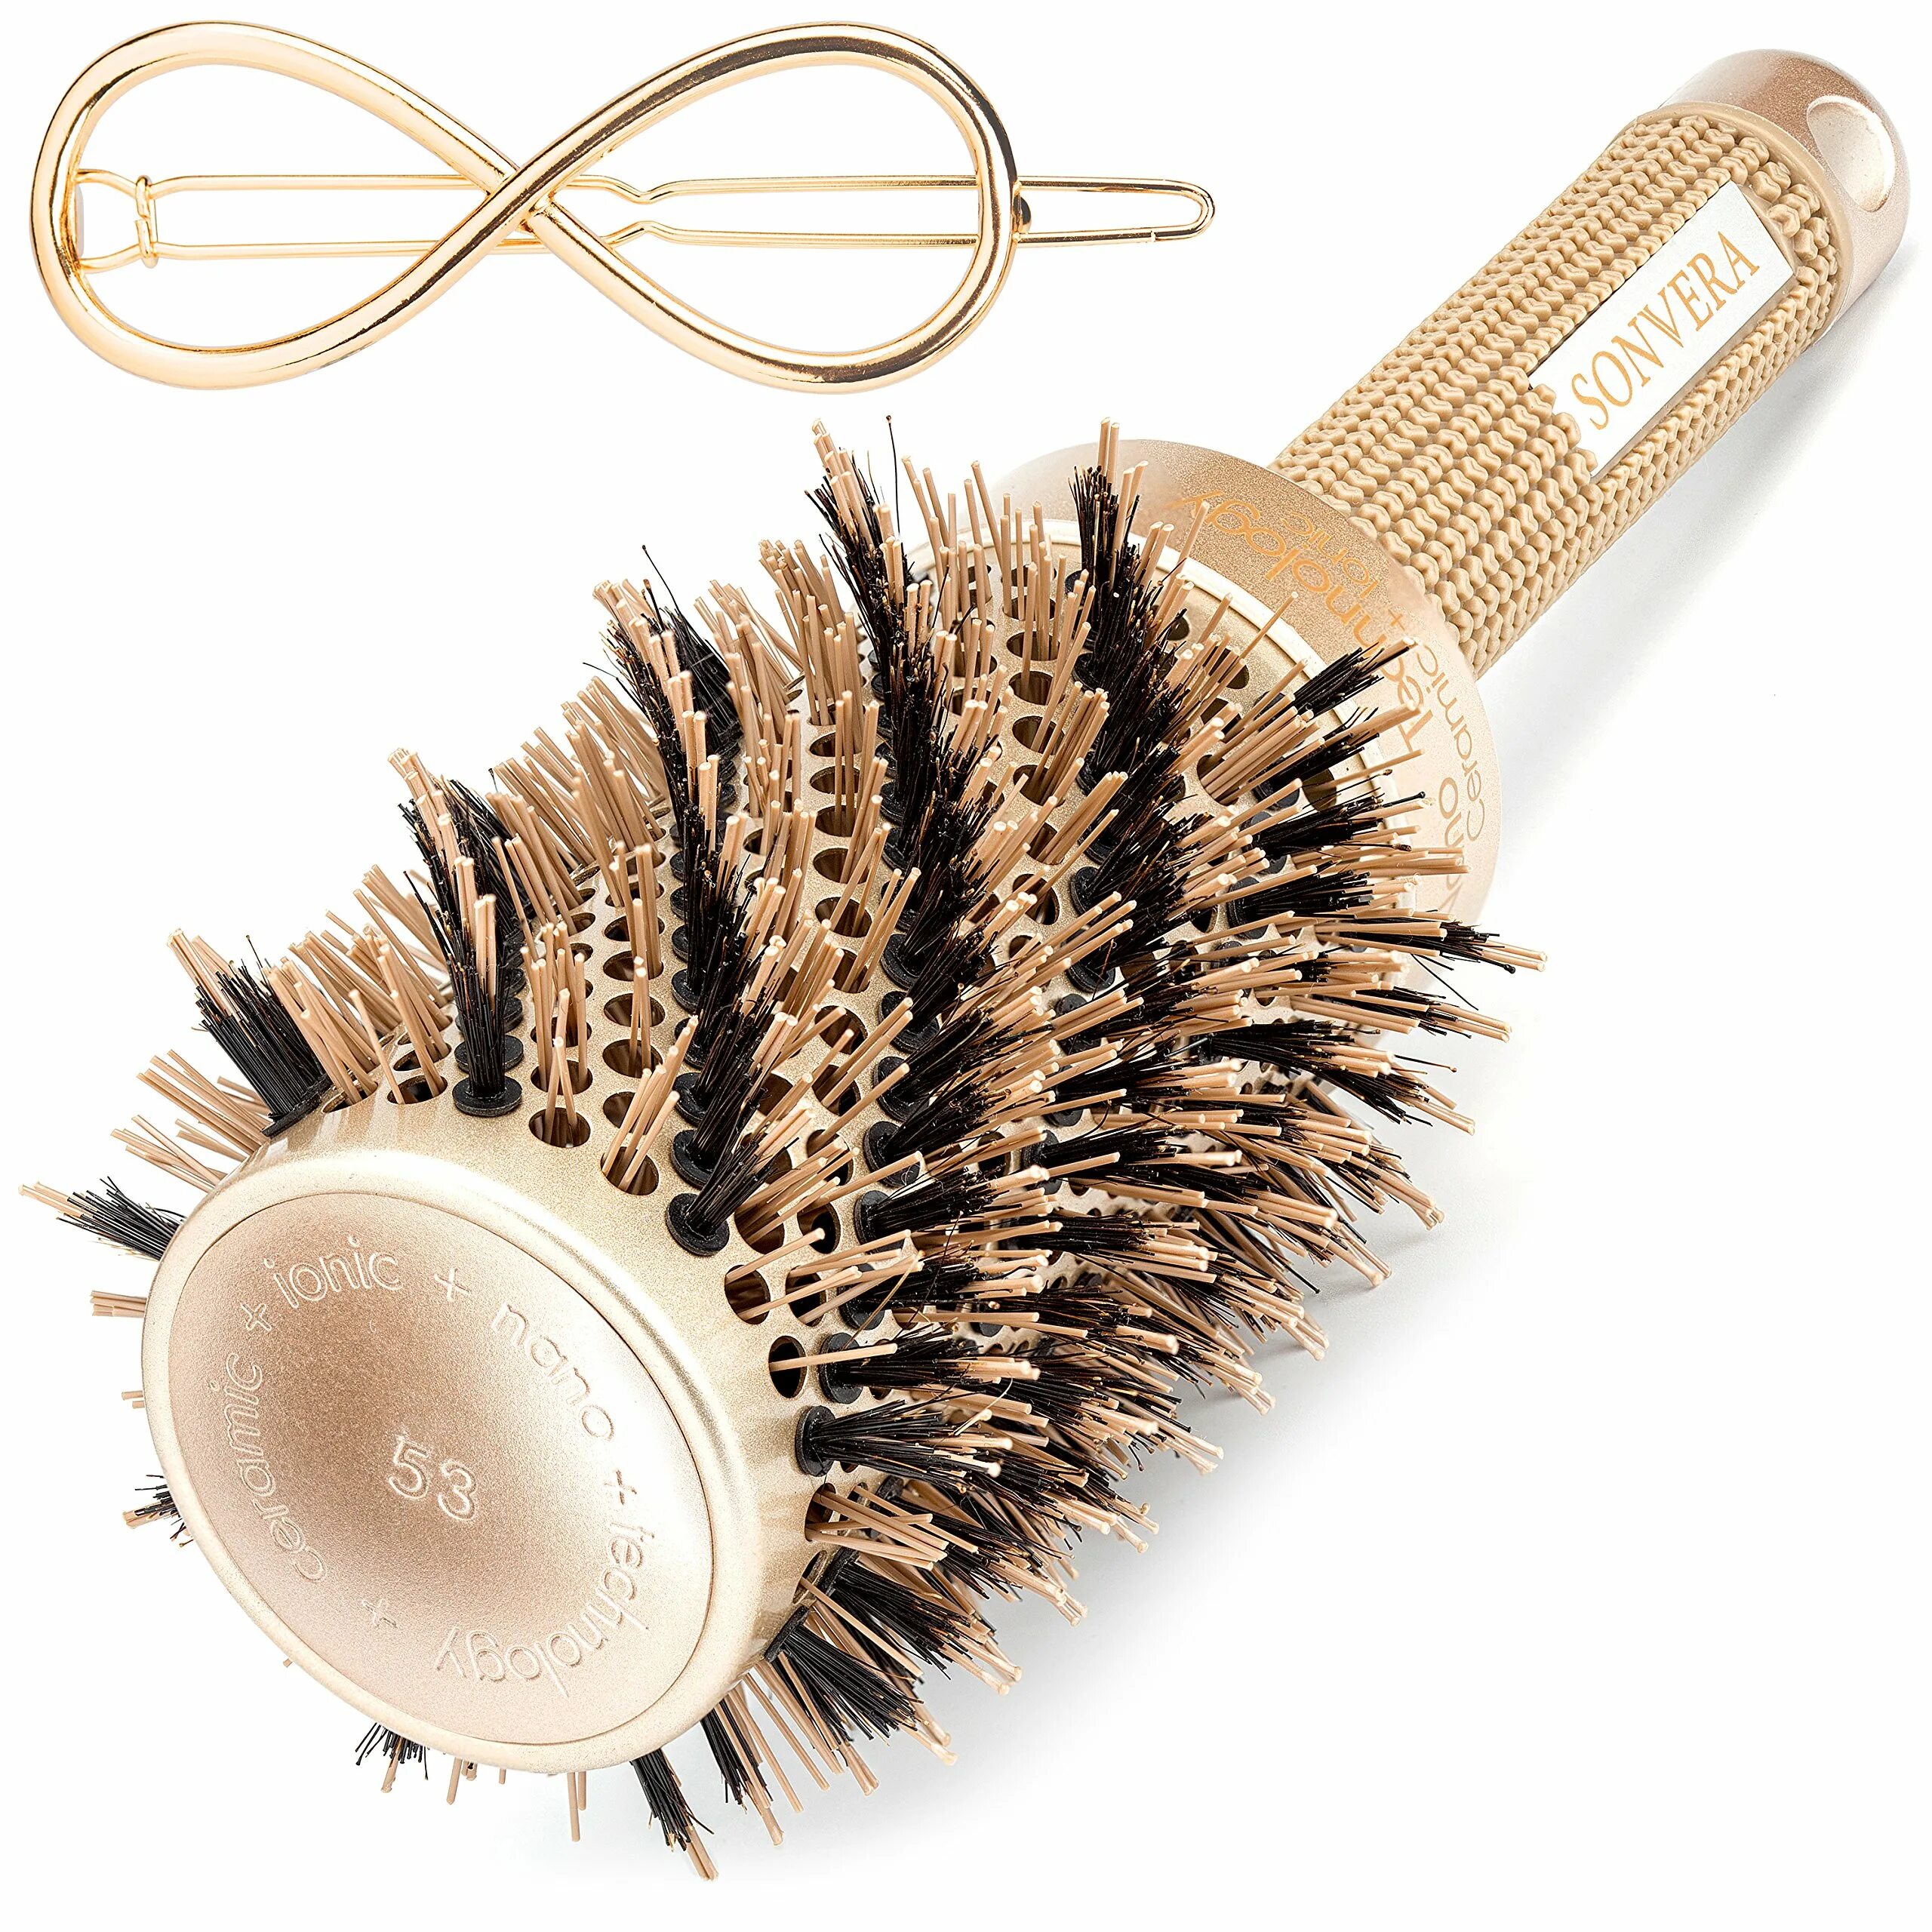 Щетка для сушки волос круглая. Round Brush for hair. Brushing Round hair. Max Pro Ceramic Round hair Dryer Brush.